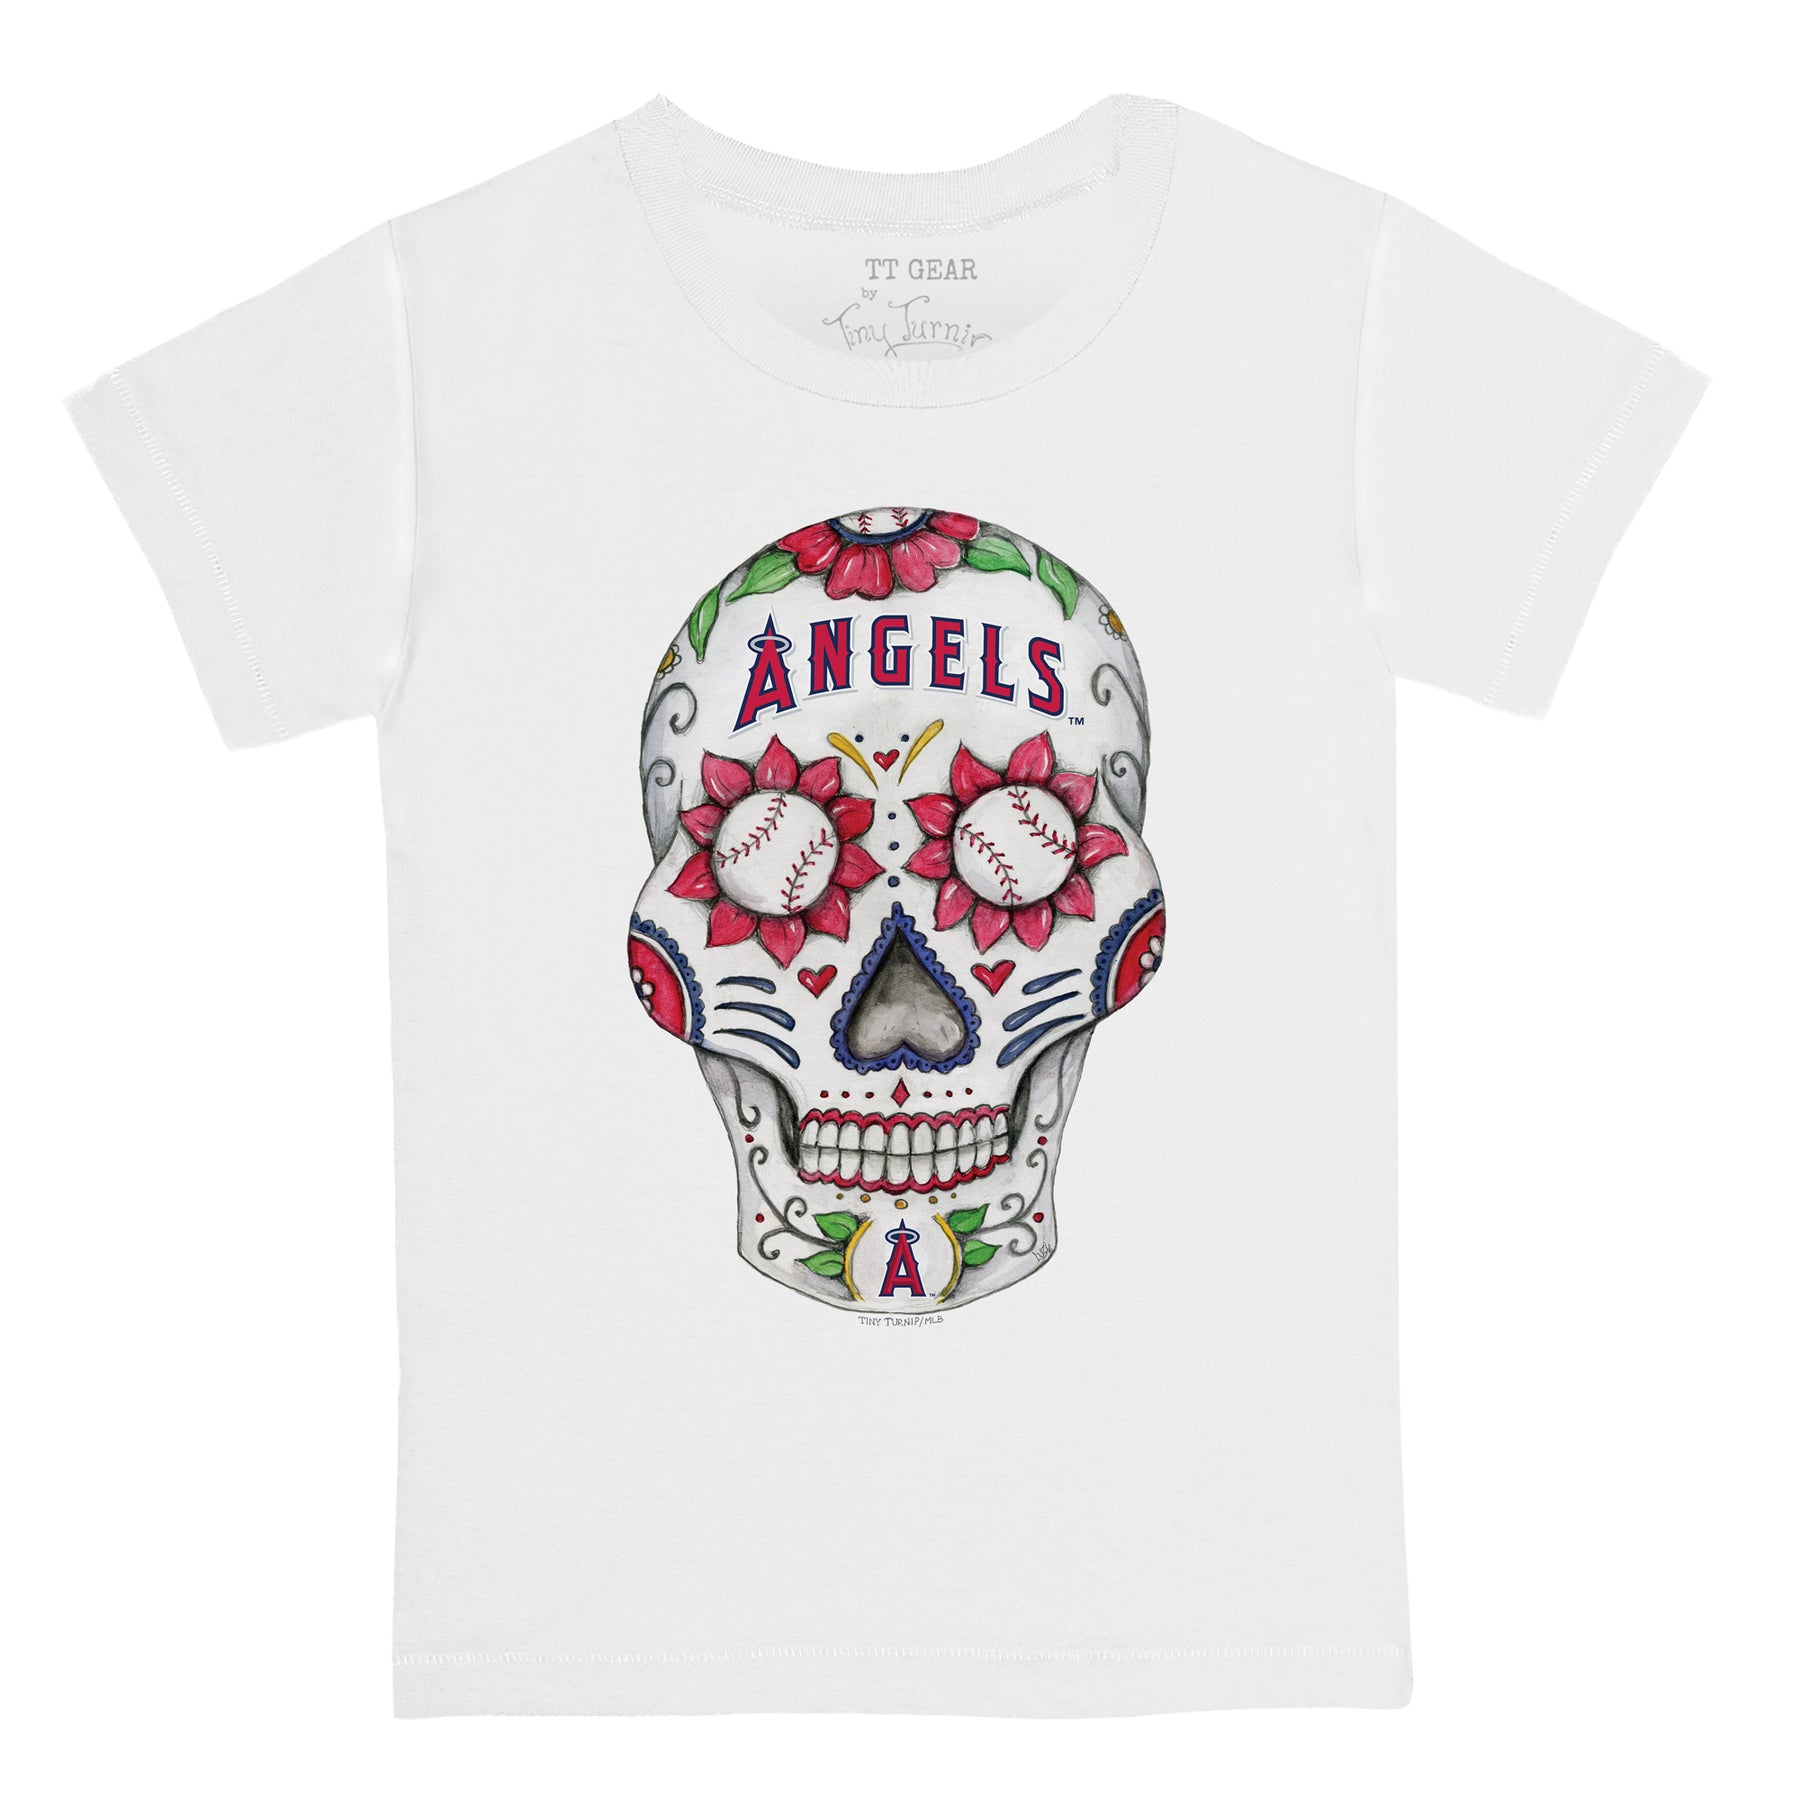 Tiny Turnip Los Angeles Angels Slugger Tee Shirt Women's 2XL / White